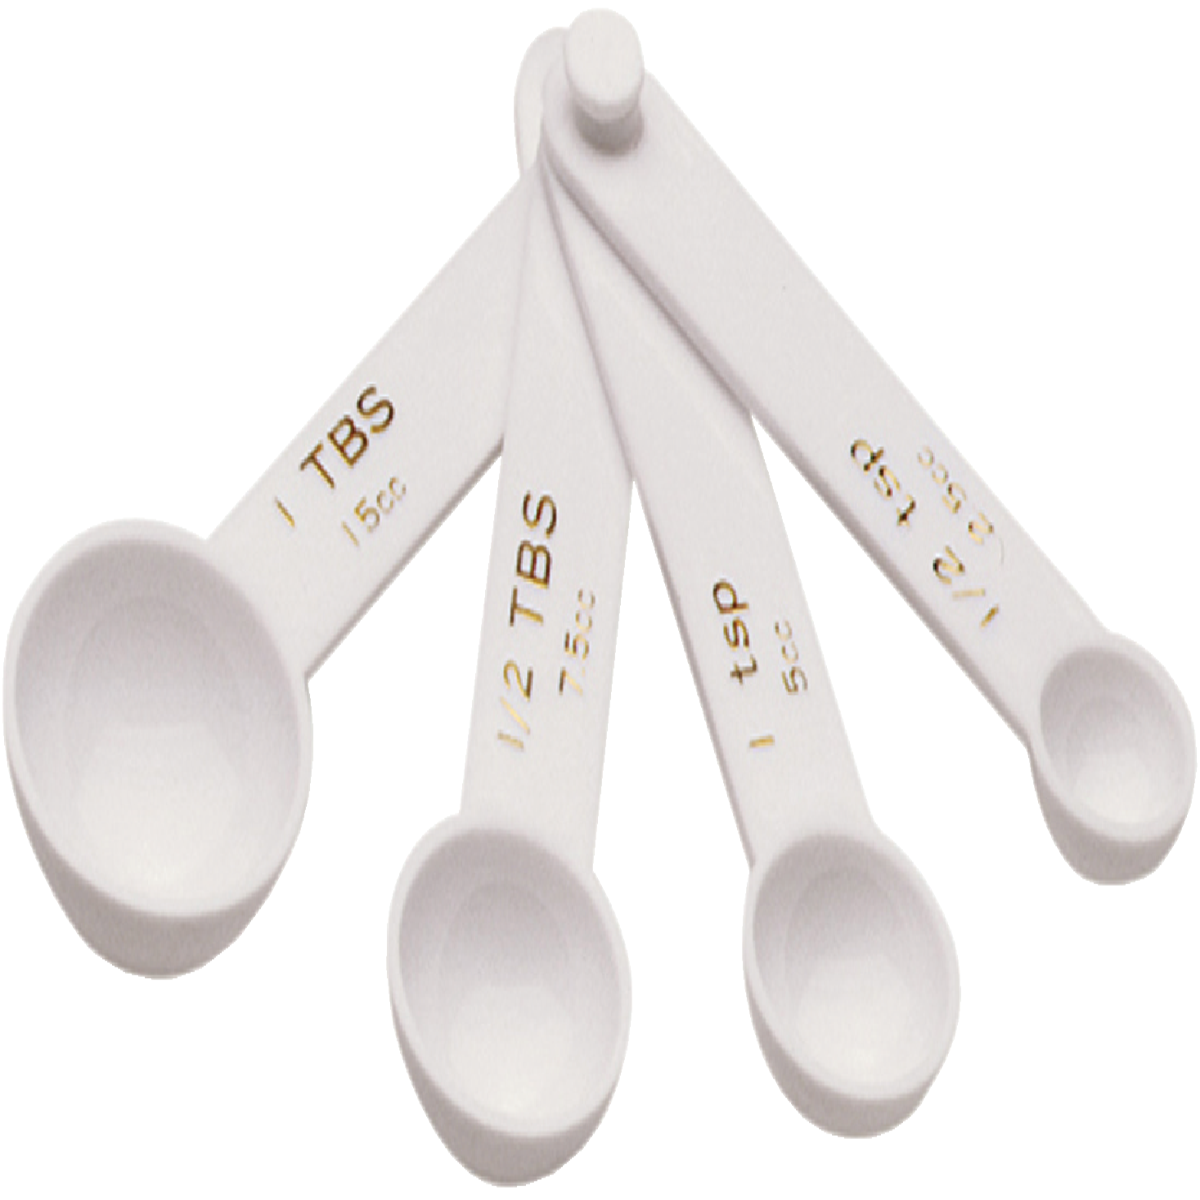 Measuring Spoon Set